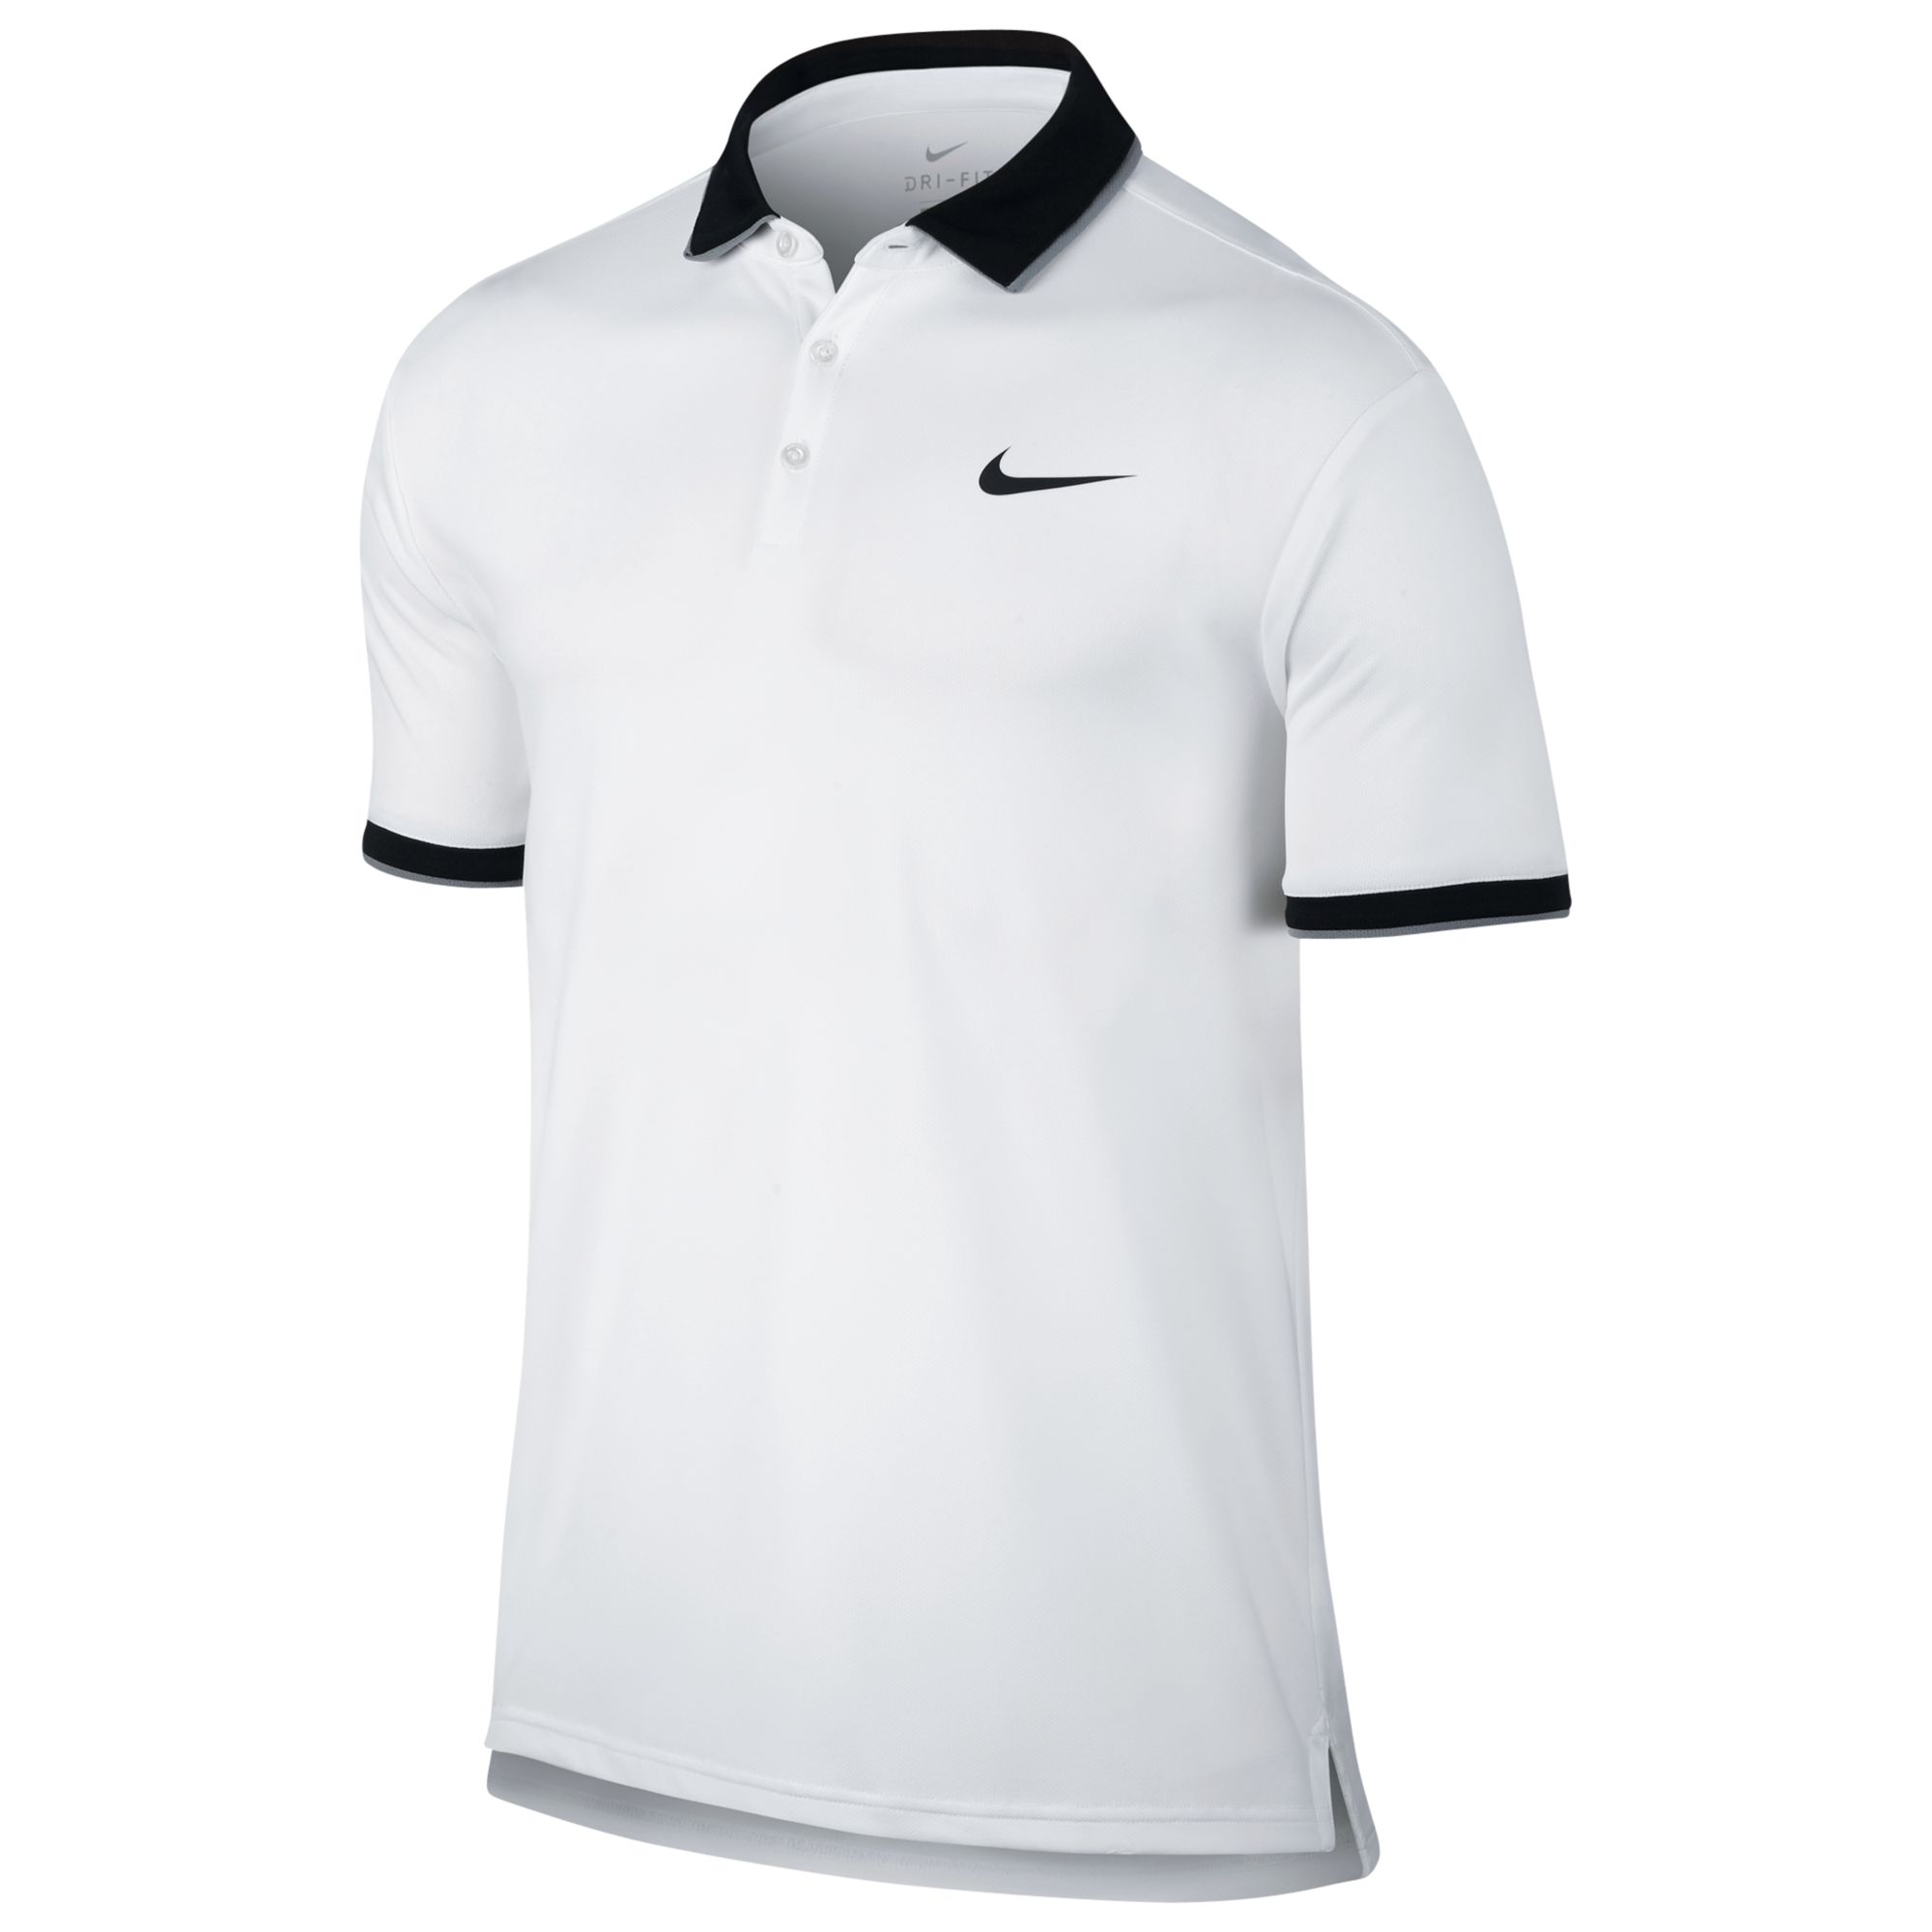 white nike tennis shirt